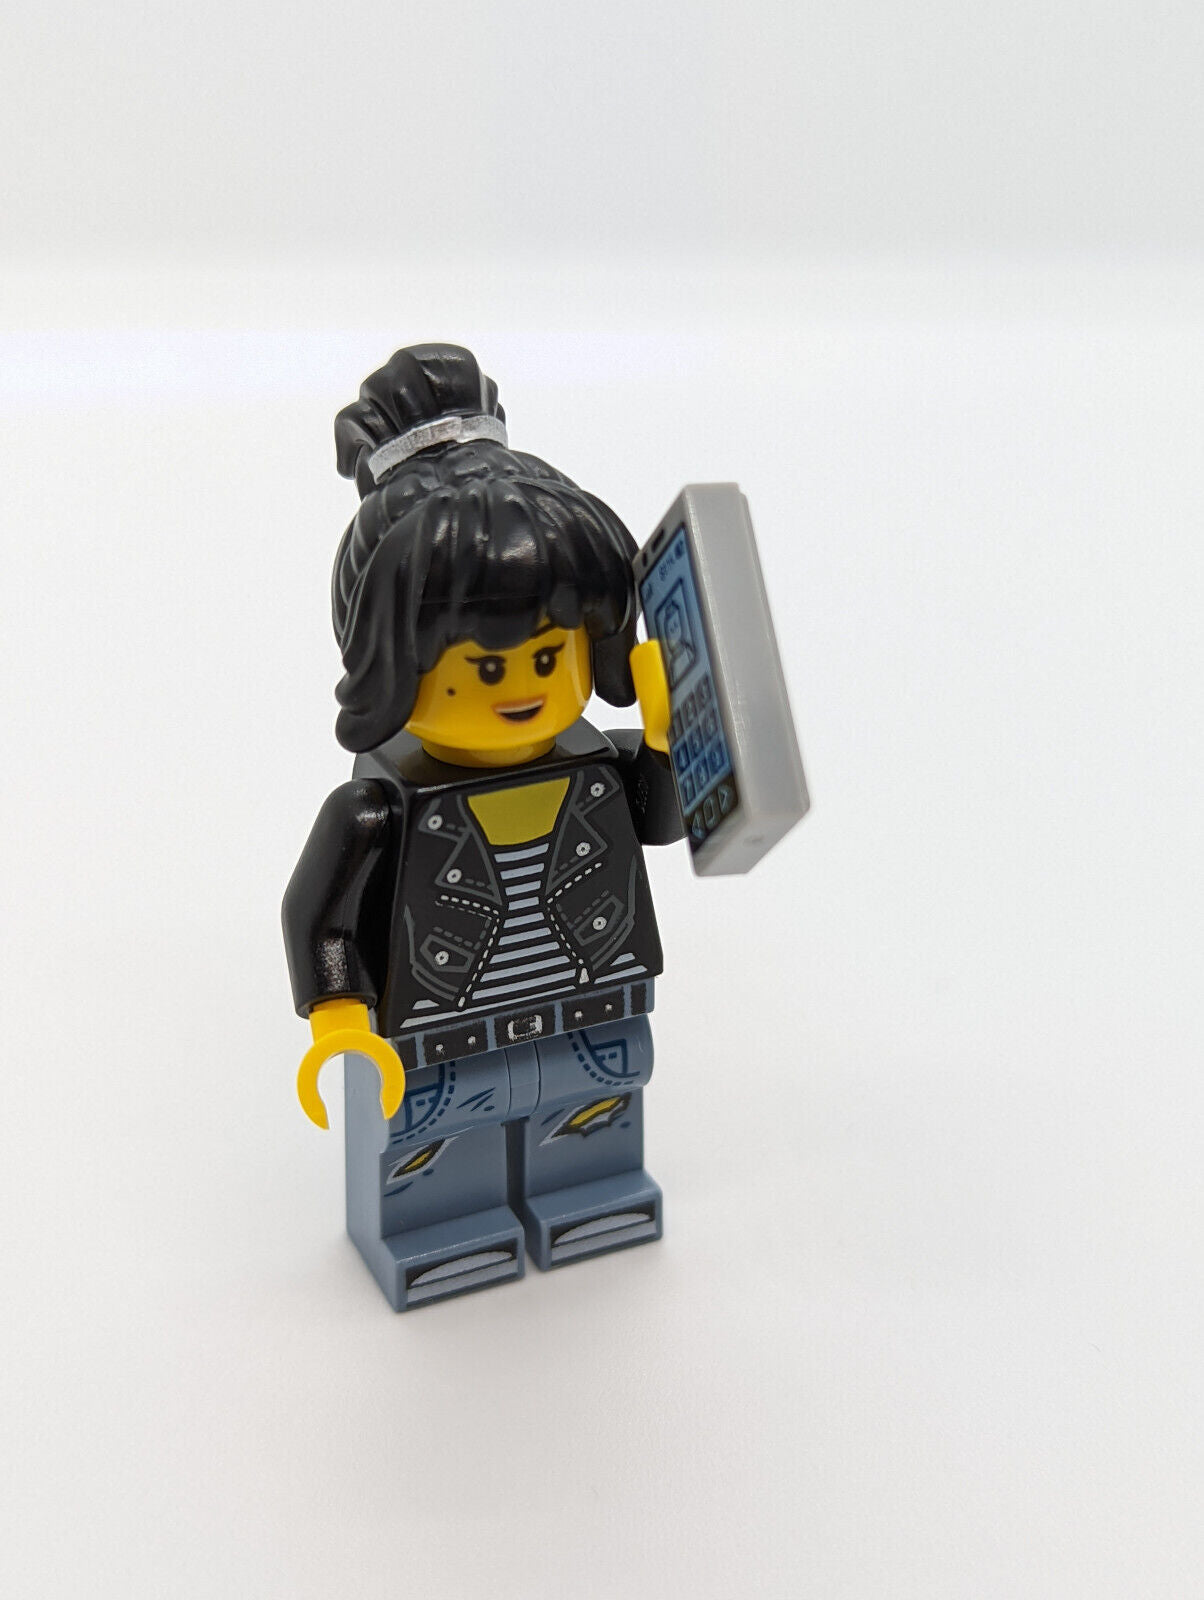 LEGO Ninjago Minifigure - City Chase 70607 Nya With Smart Phone